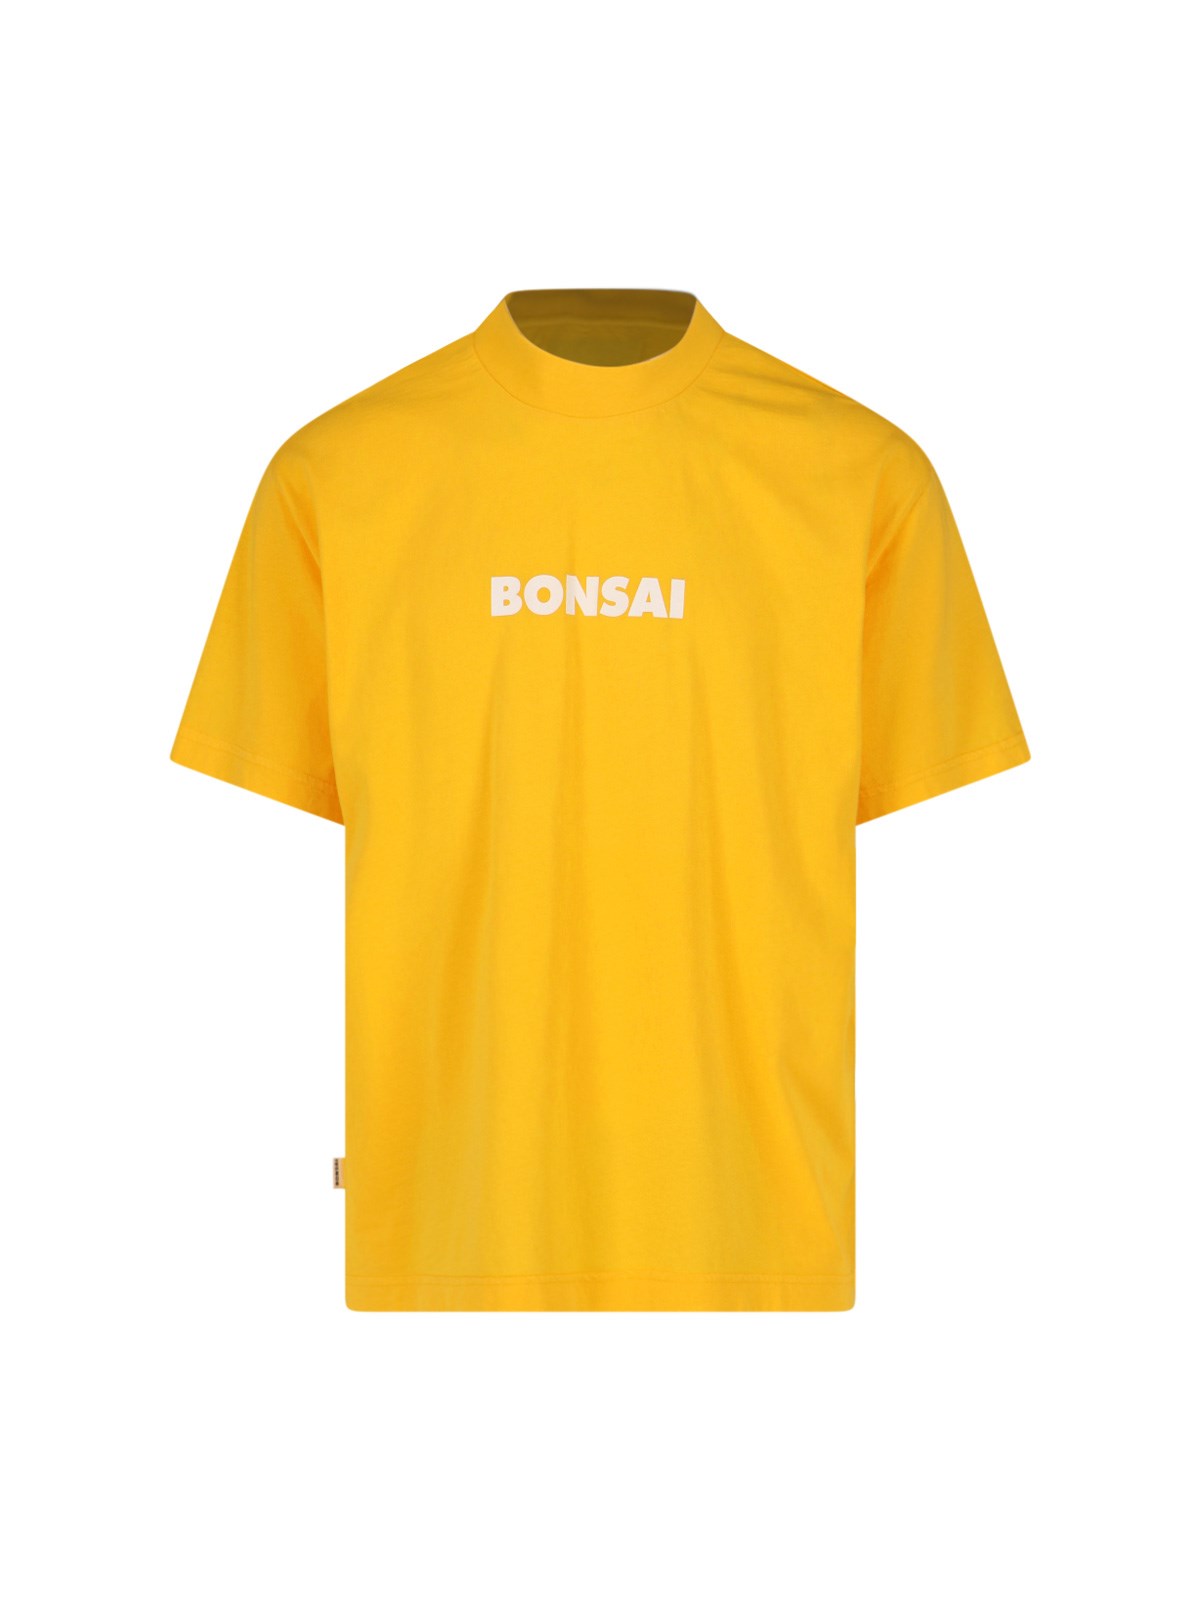 BONSAI LOGO T-SHIRT